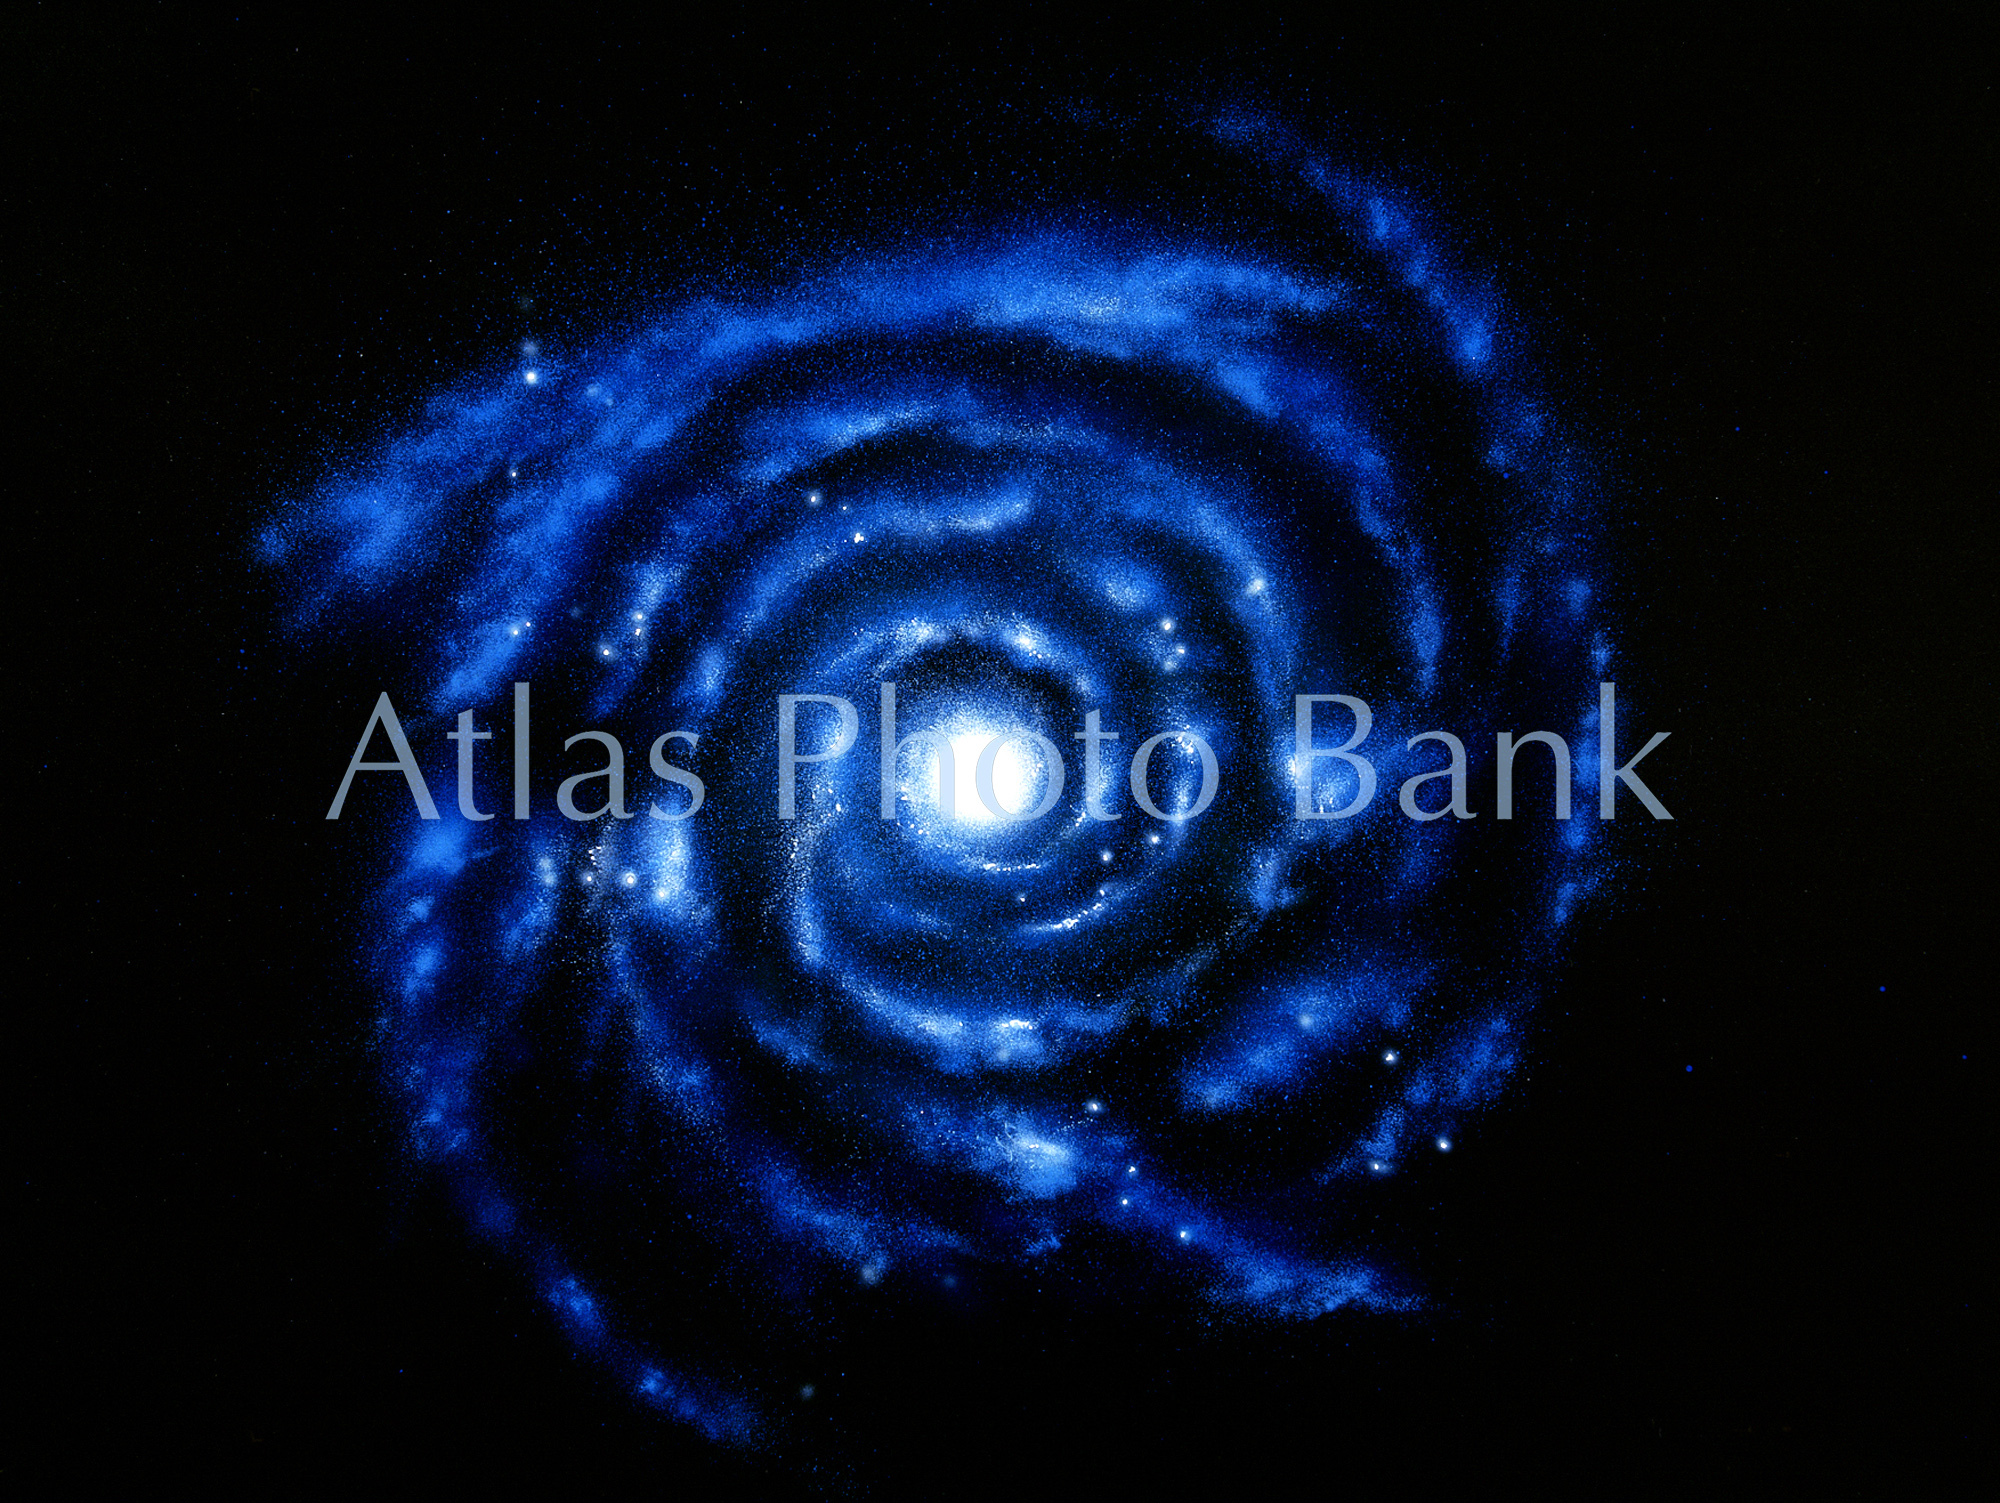 MW-059-渦巻銀河